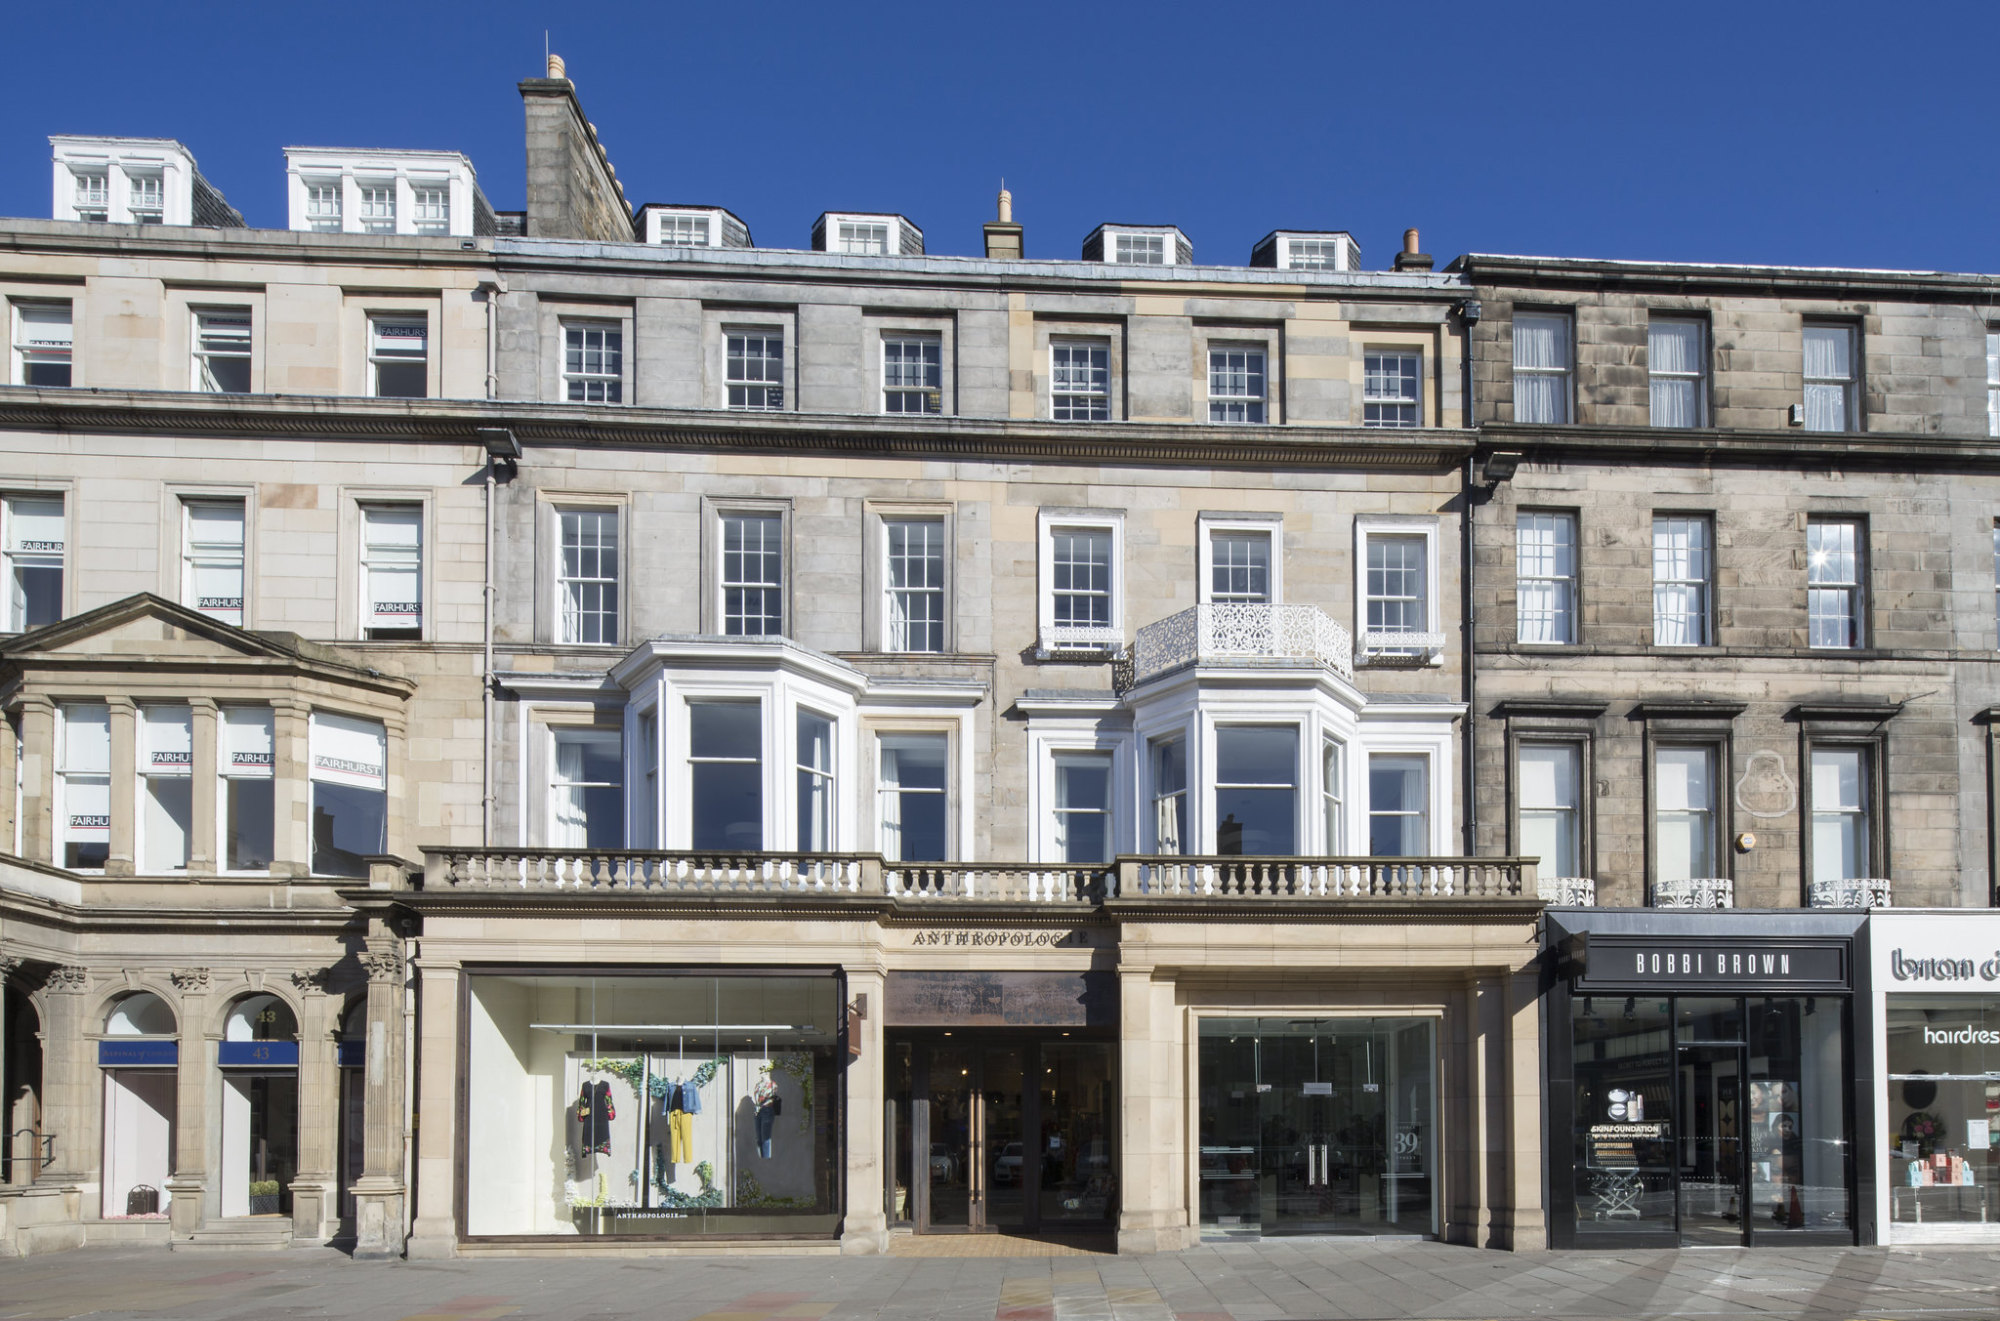 Crown Estate Scotland Appoints London & Scottish to Manage Urban Property